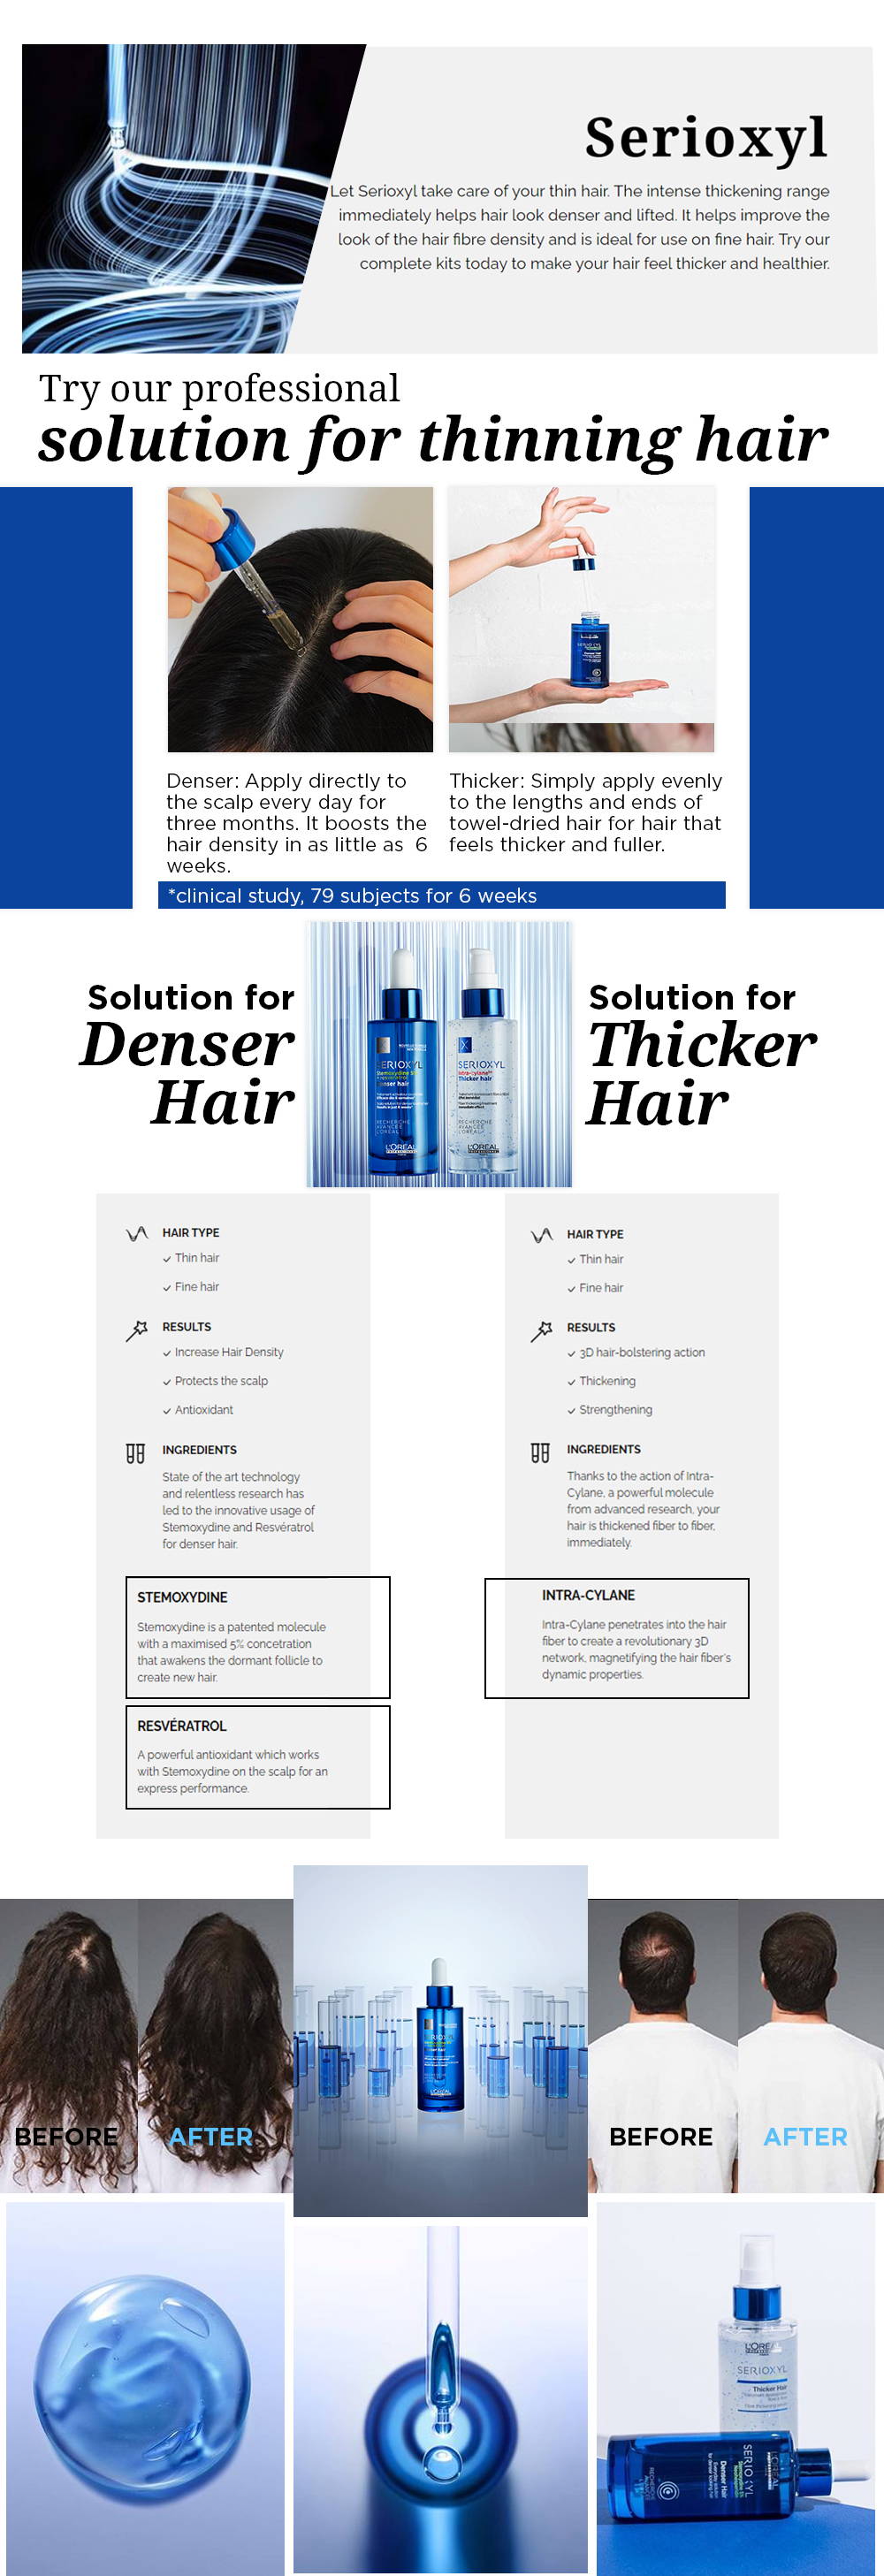 L'Oreal Professionnel- Serioxyl Denser Hair Serum 90ml Bagallery Deals